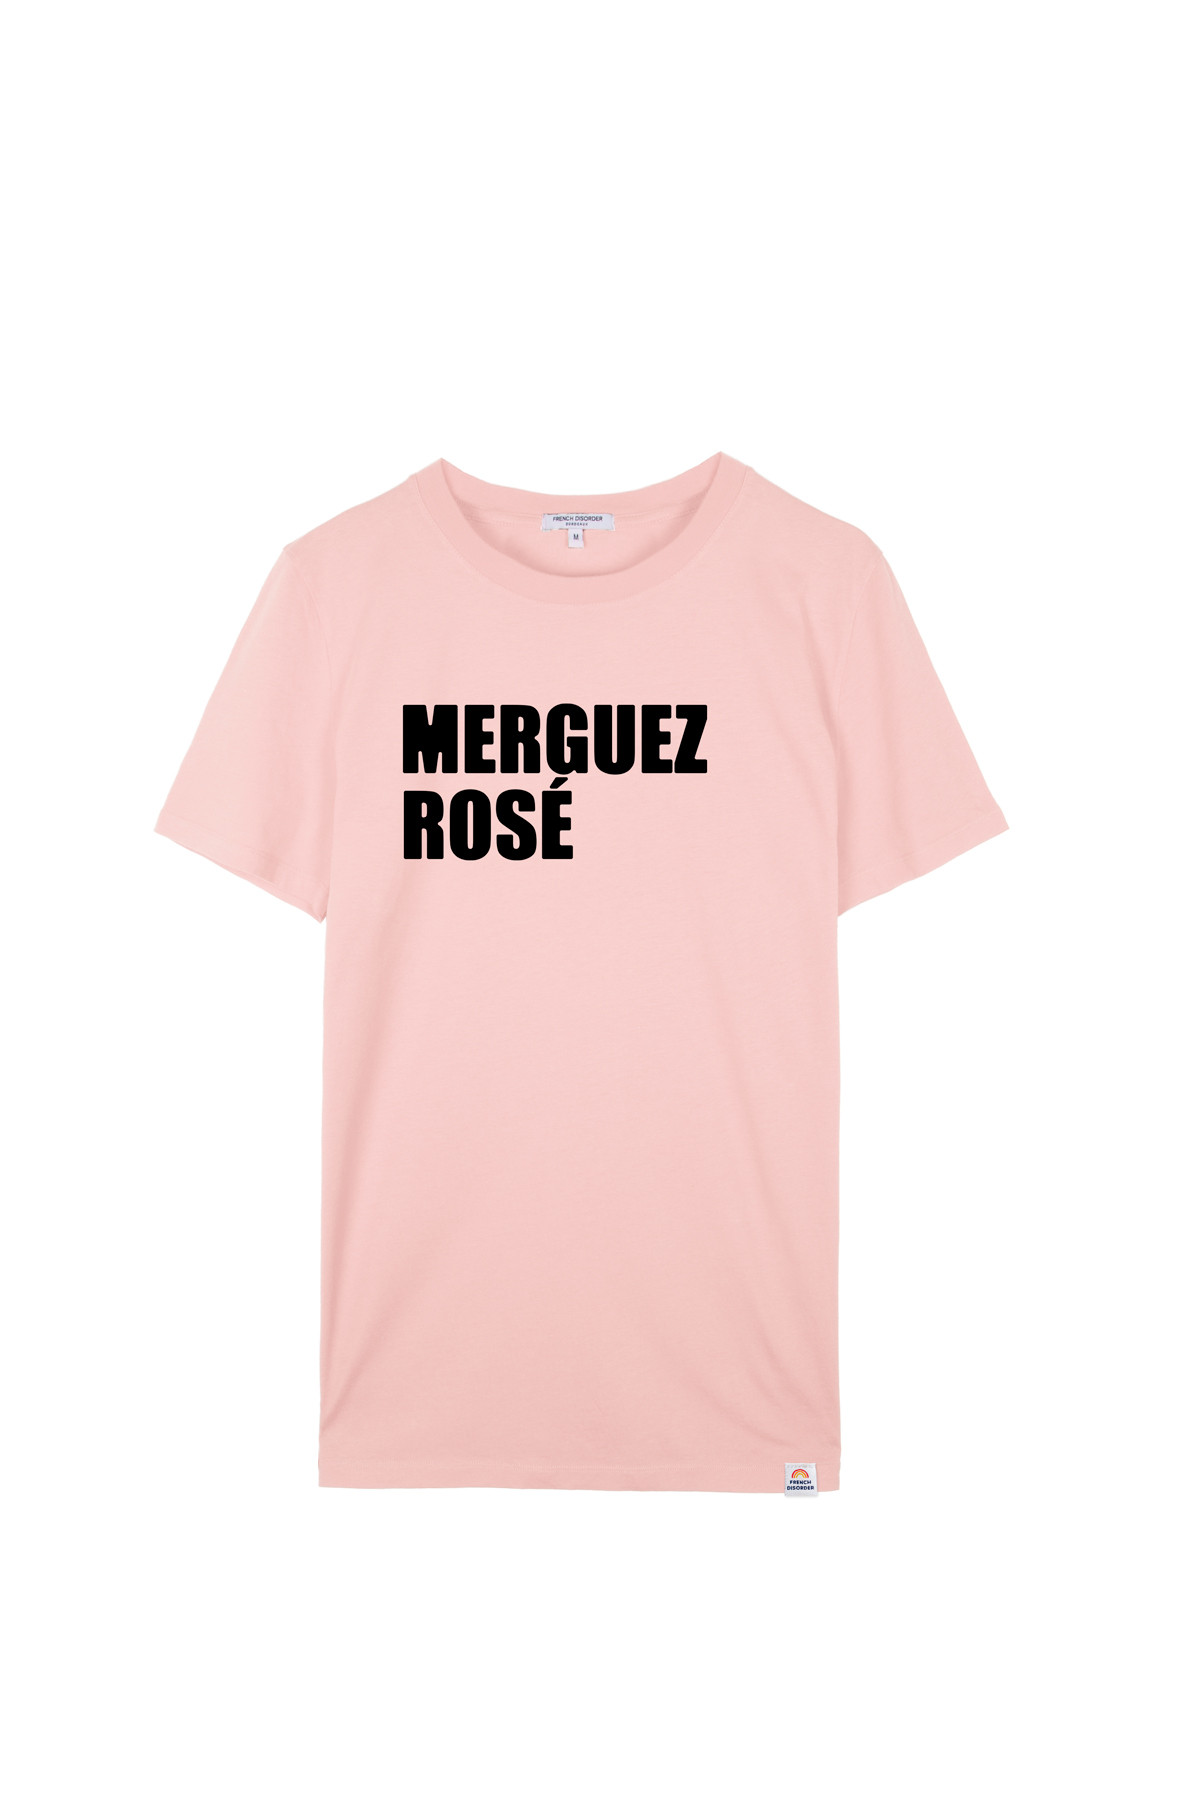 Photo de T-SHIRTS COL ROND Tshirt MERGUEZ ROSE chez French Disorder